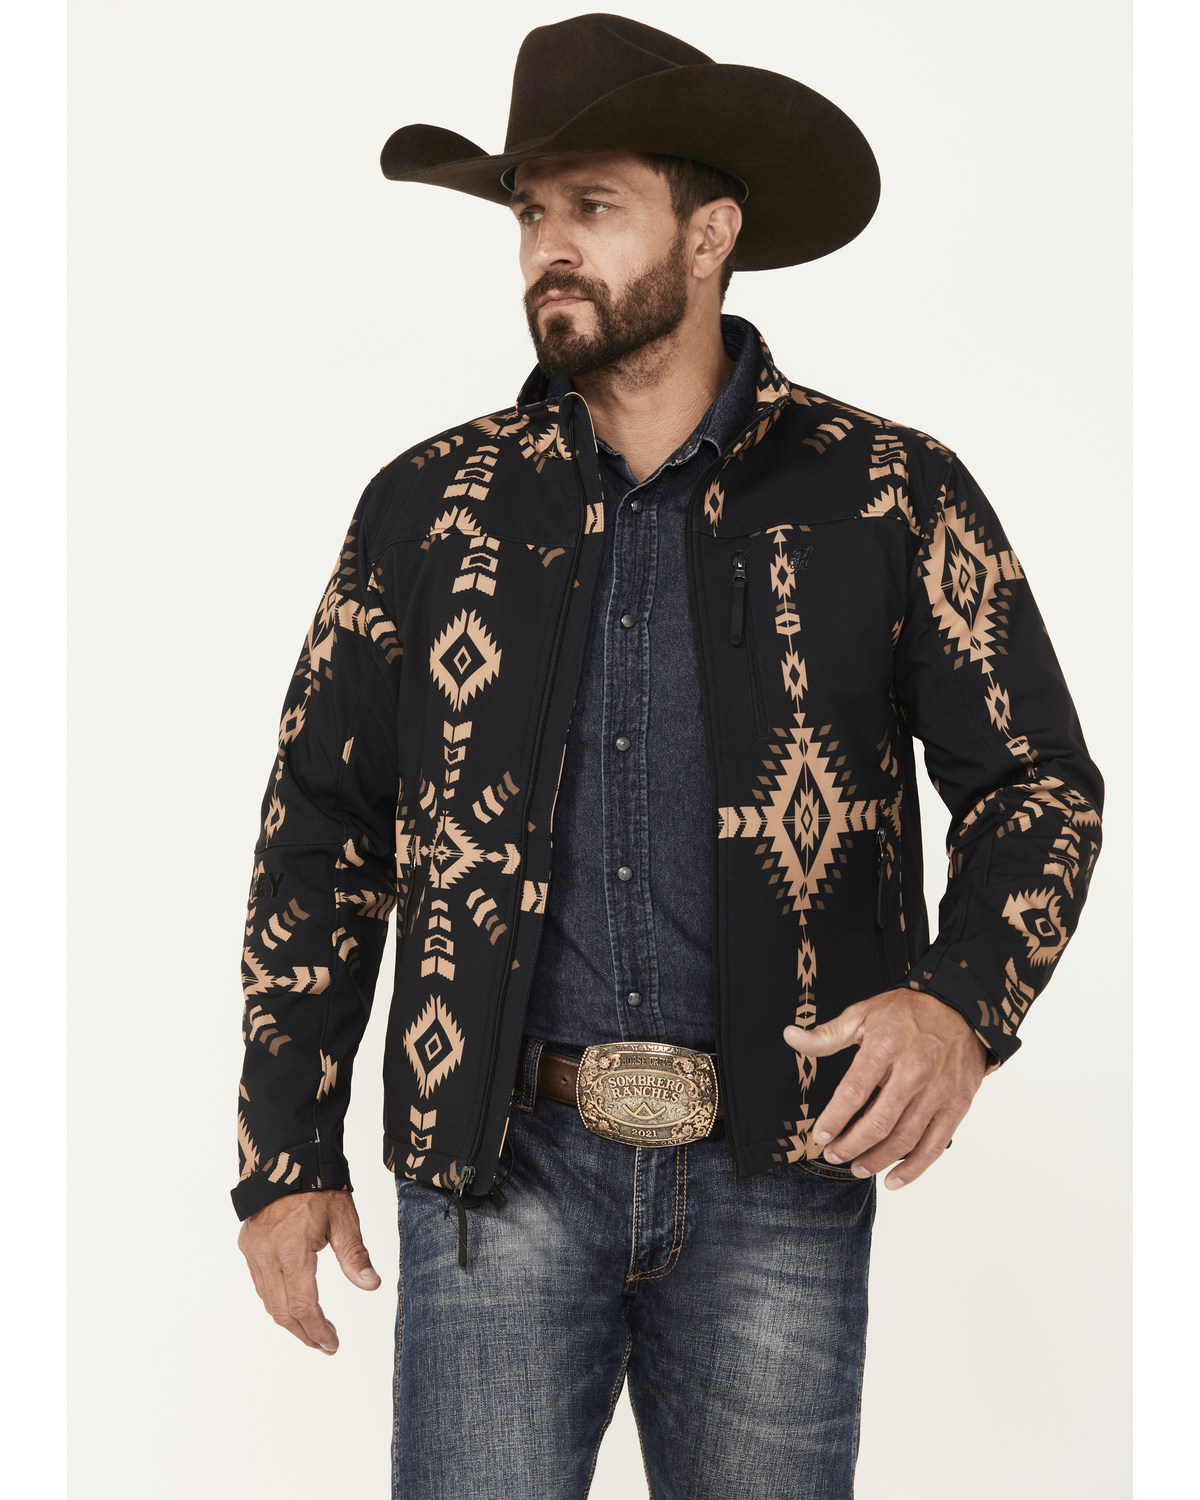 Hooey Men's Southwestern Print Softshell Jacket